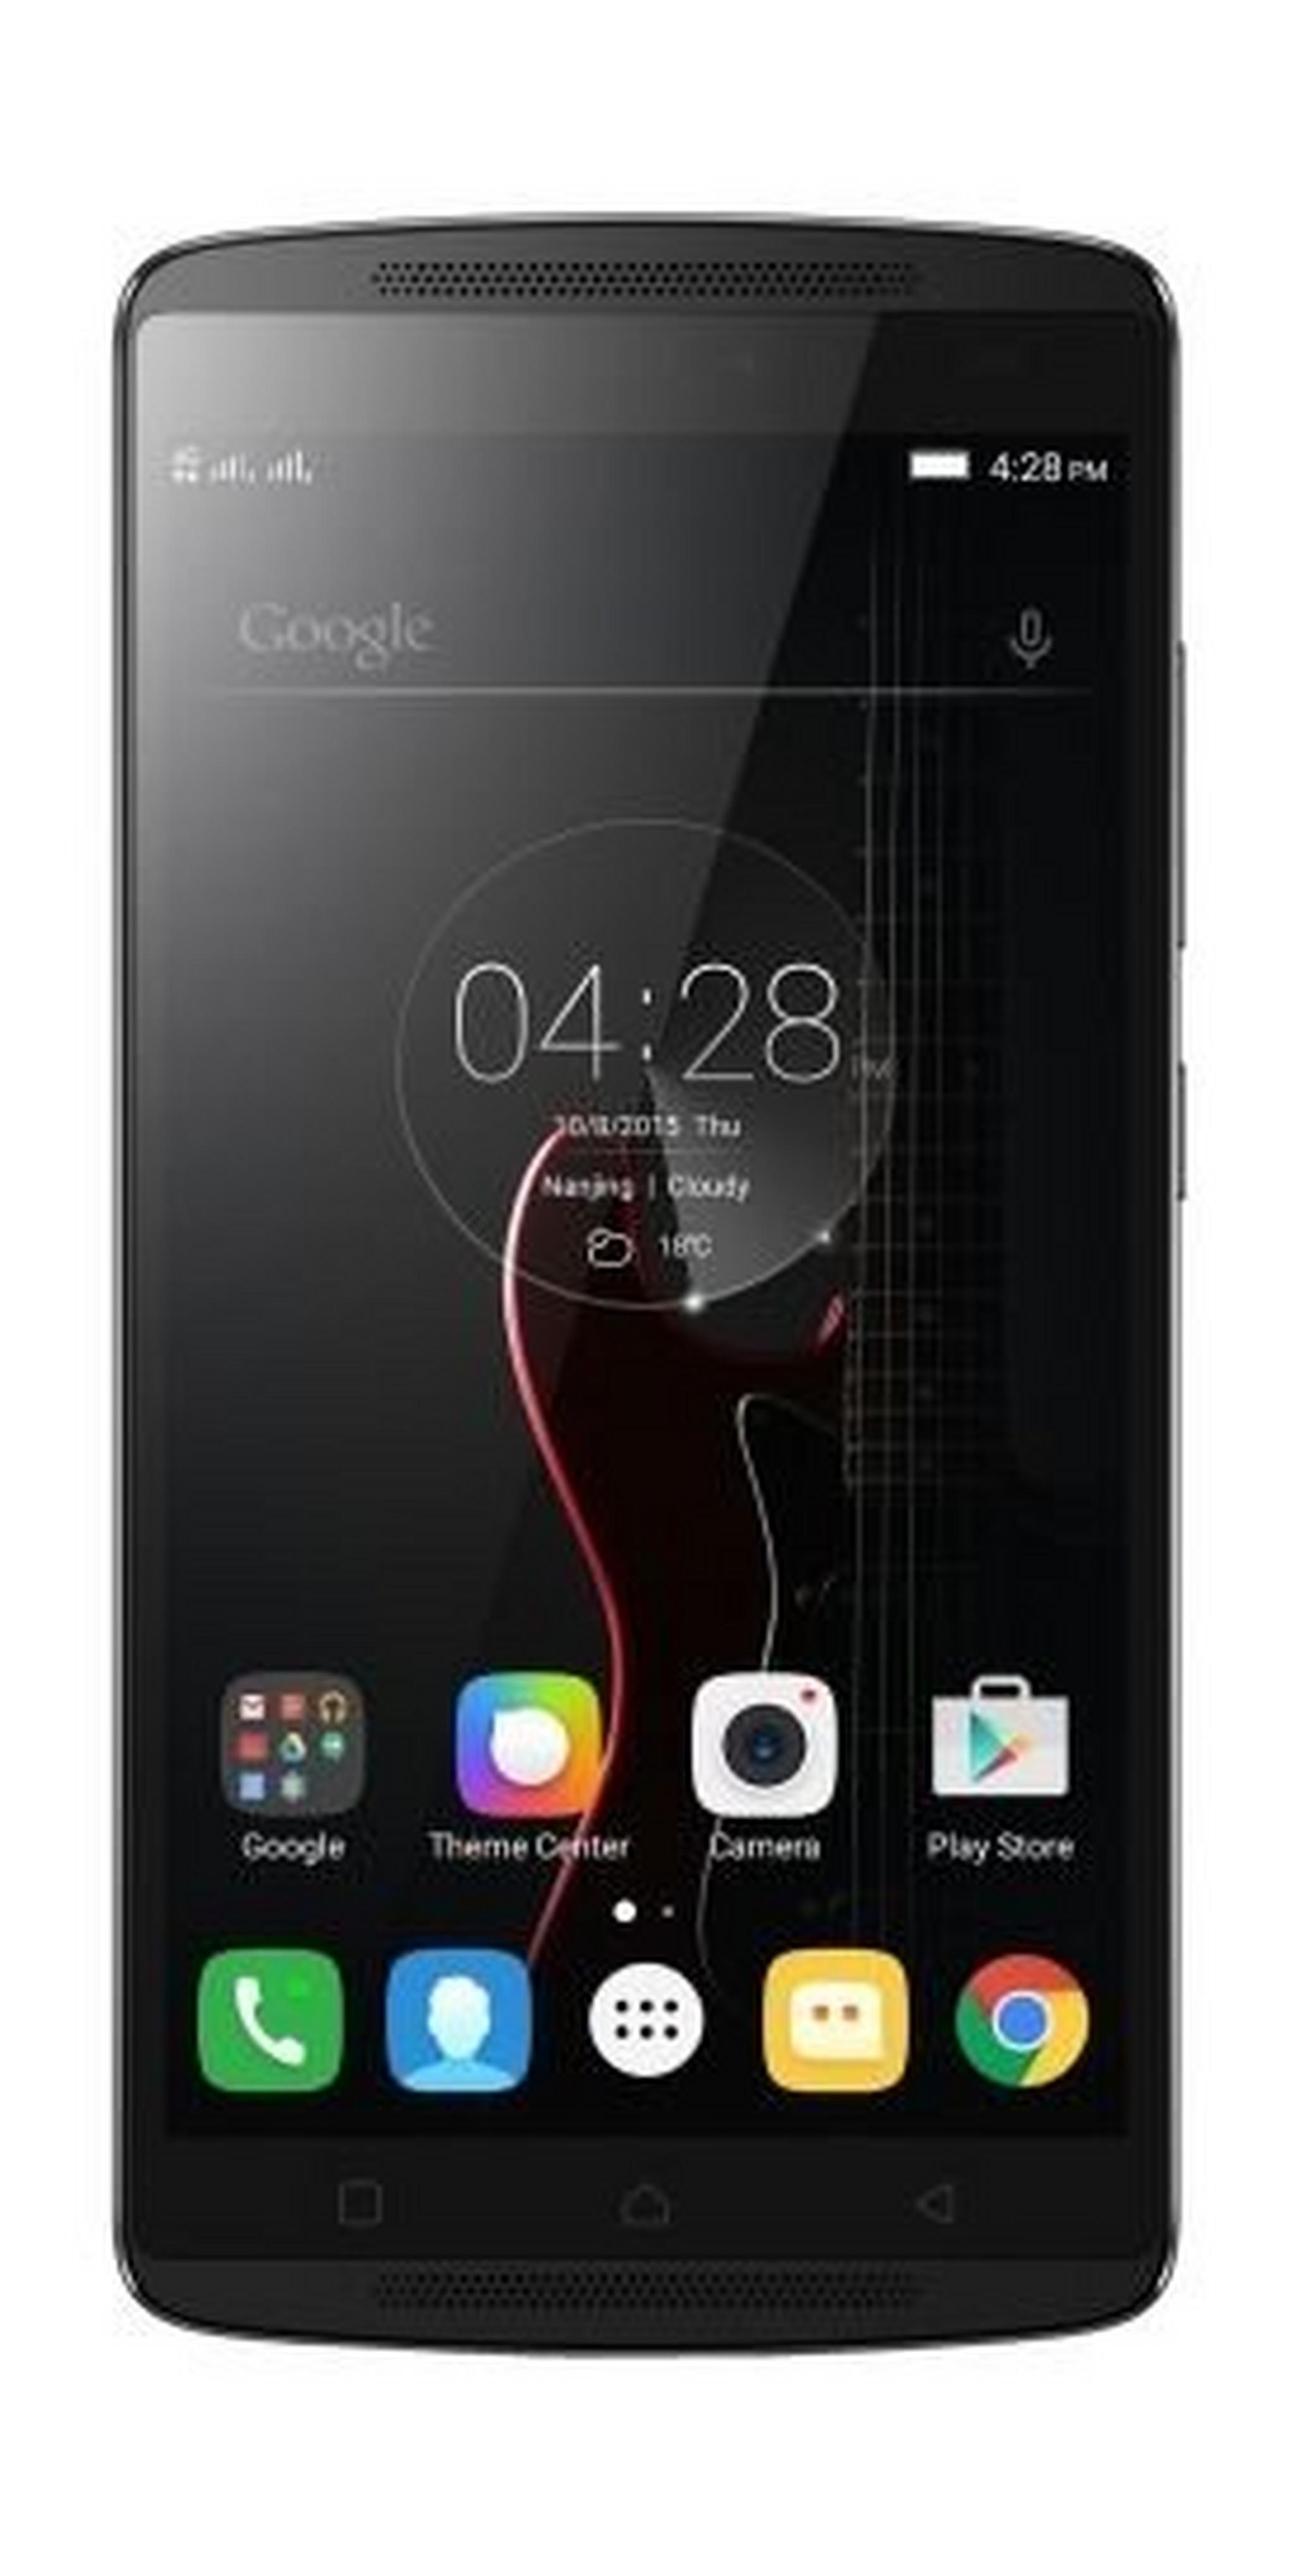 Lenovo A7010 32GB 13MP 4G LTE 5.5-inch Dual SIM Smartphone - Black